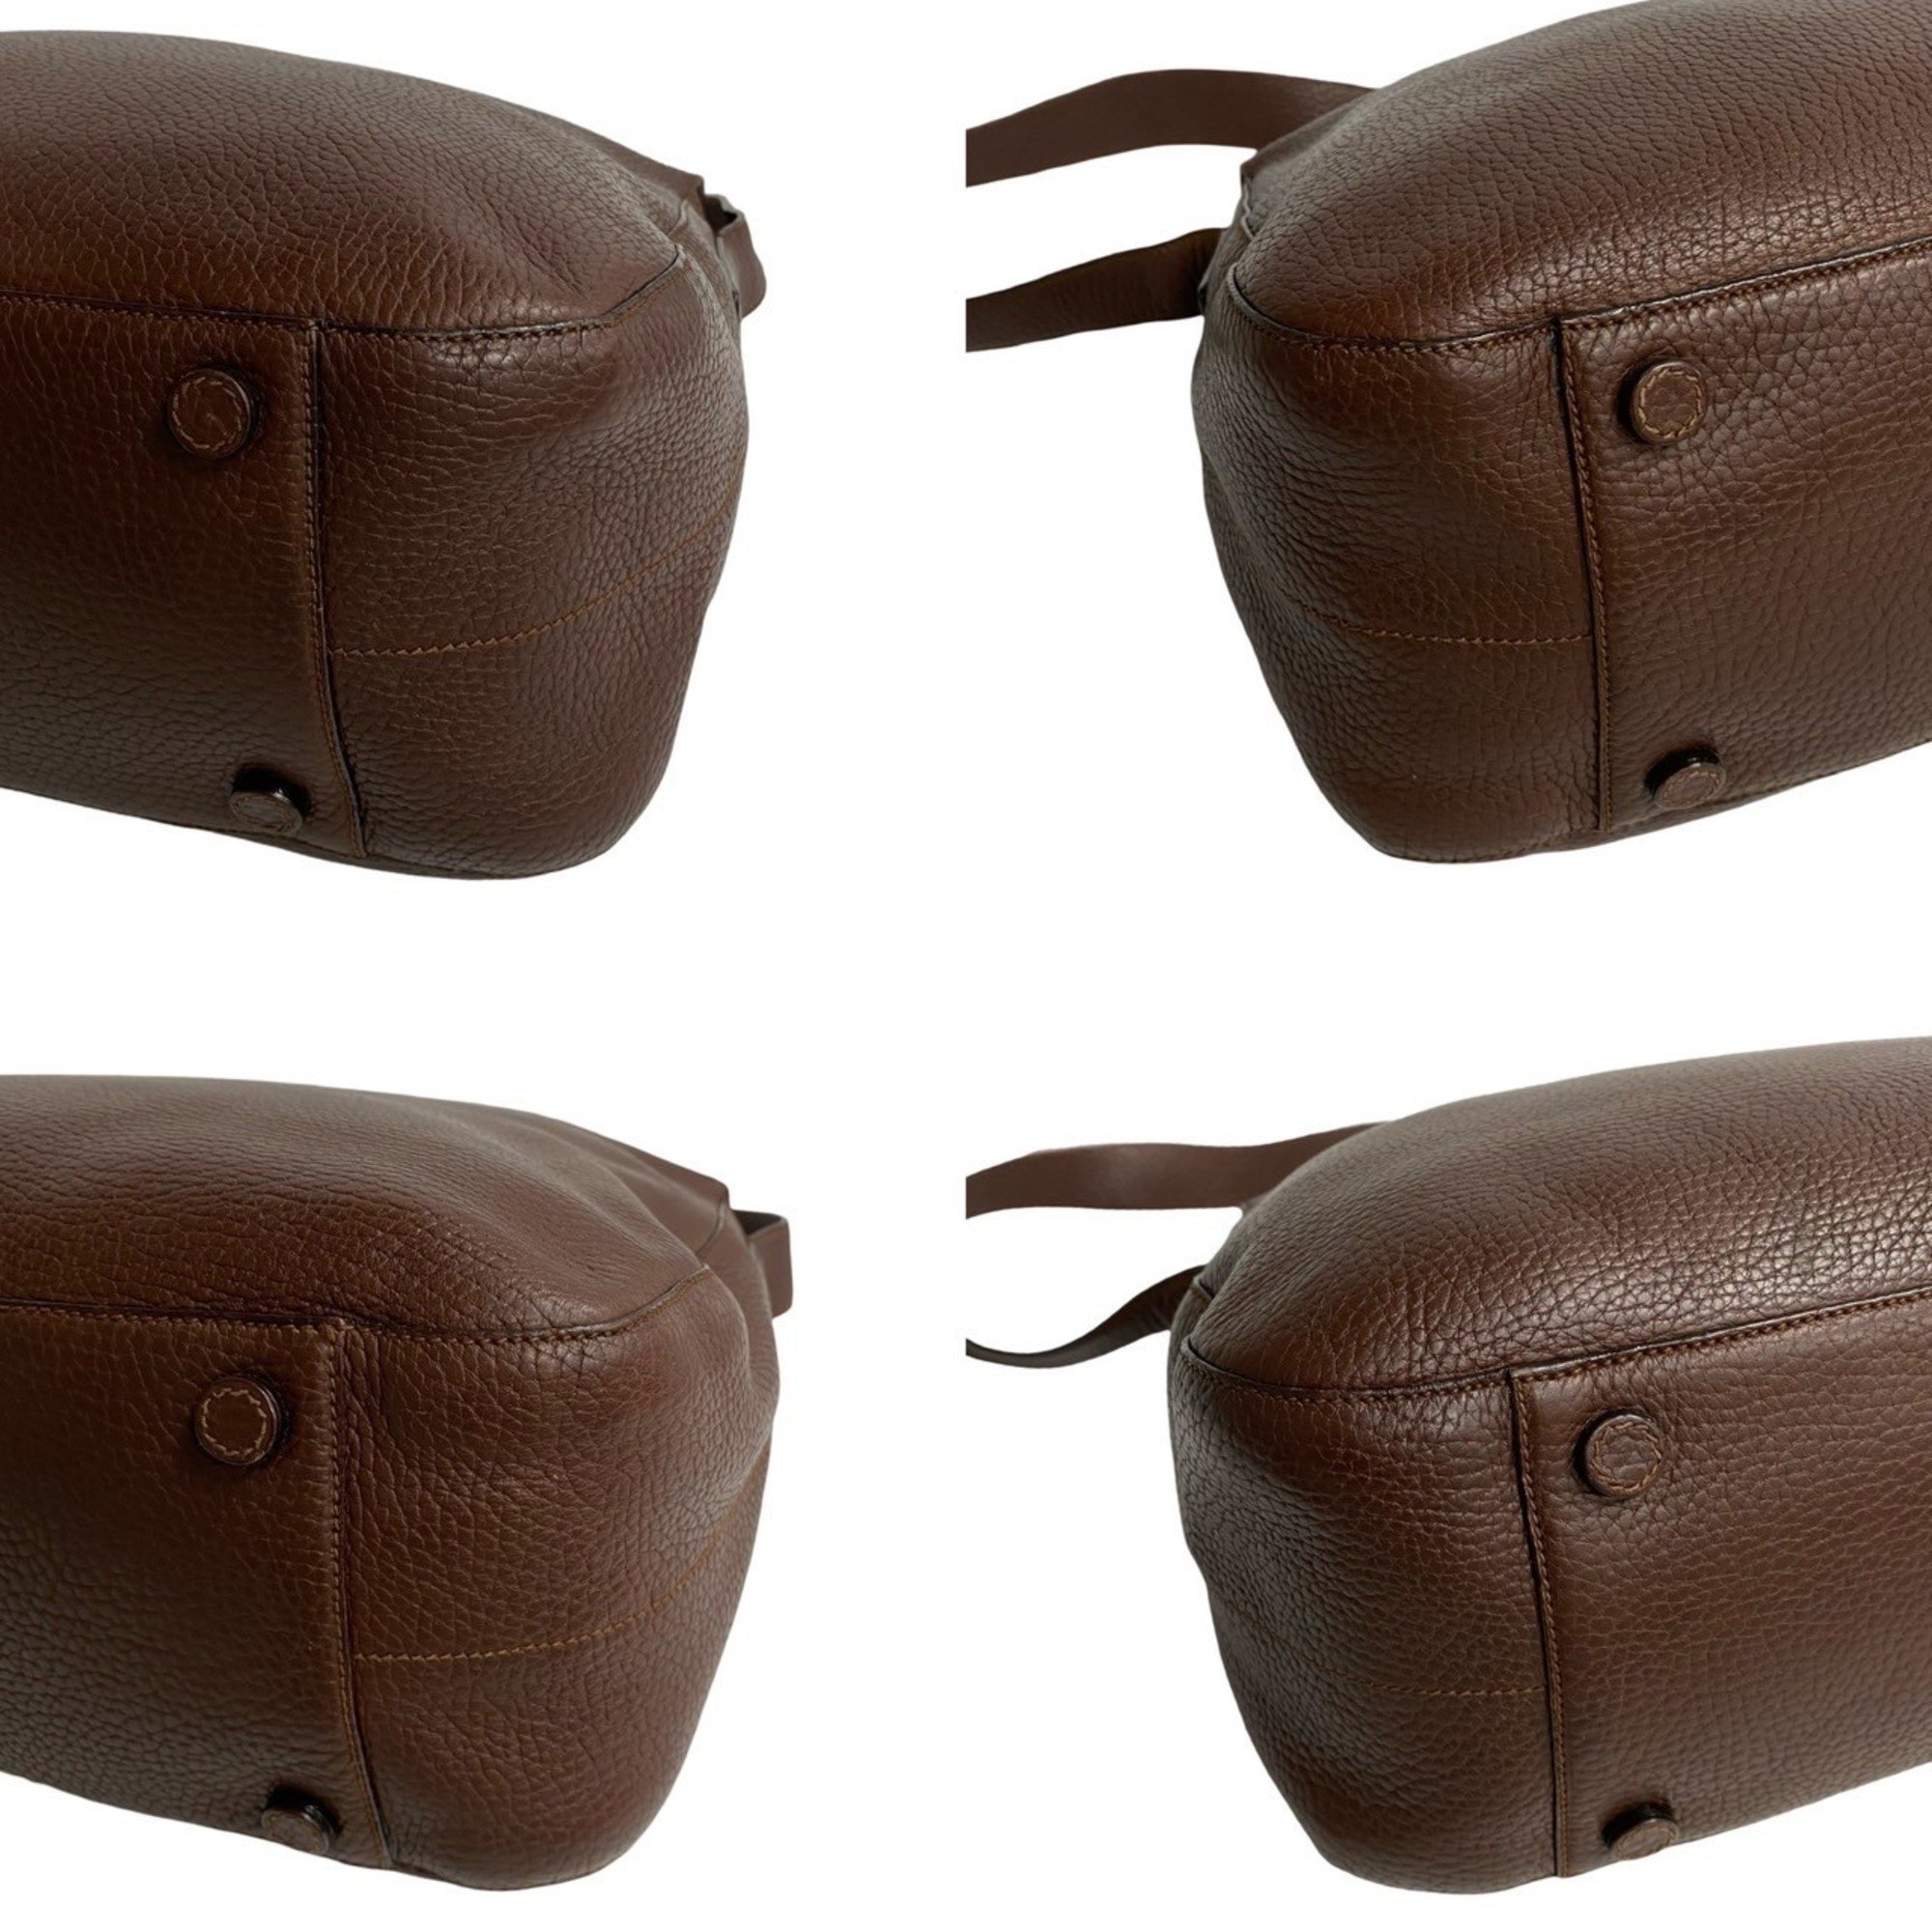 PRADA Prada engraved leather semi bag pochette sacoche brown 23457